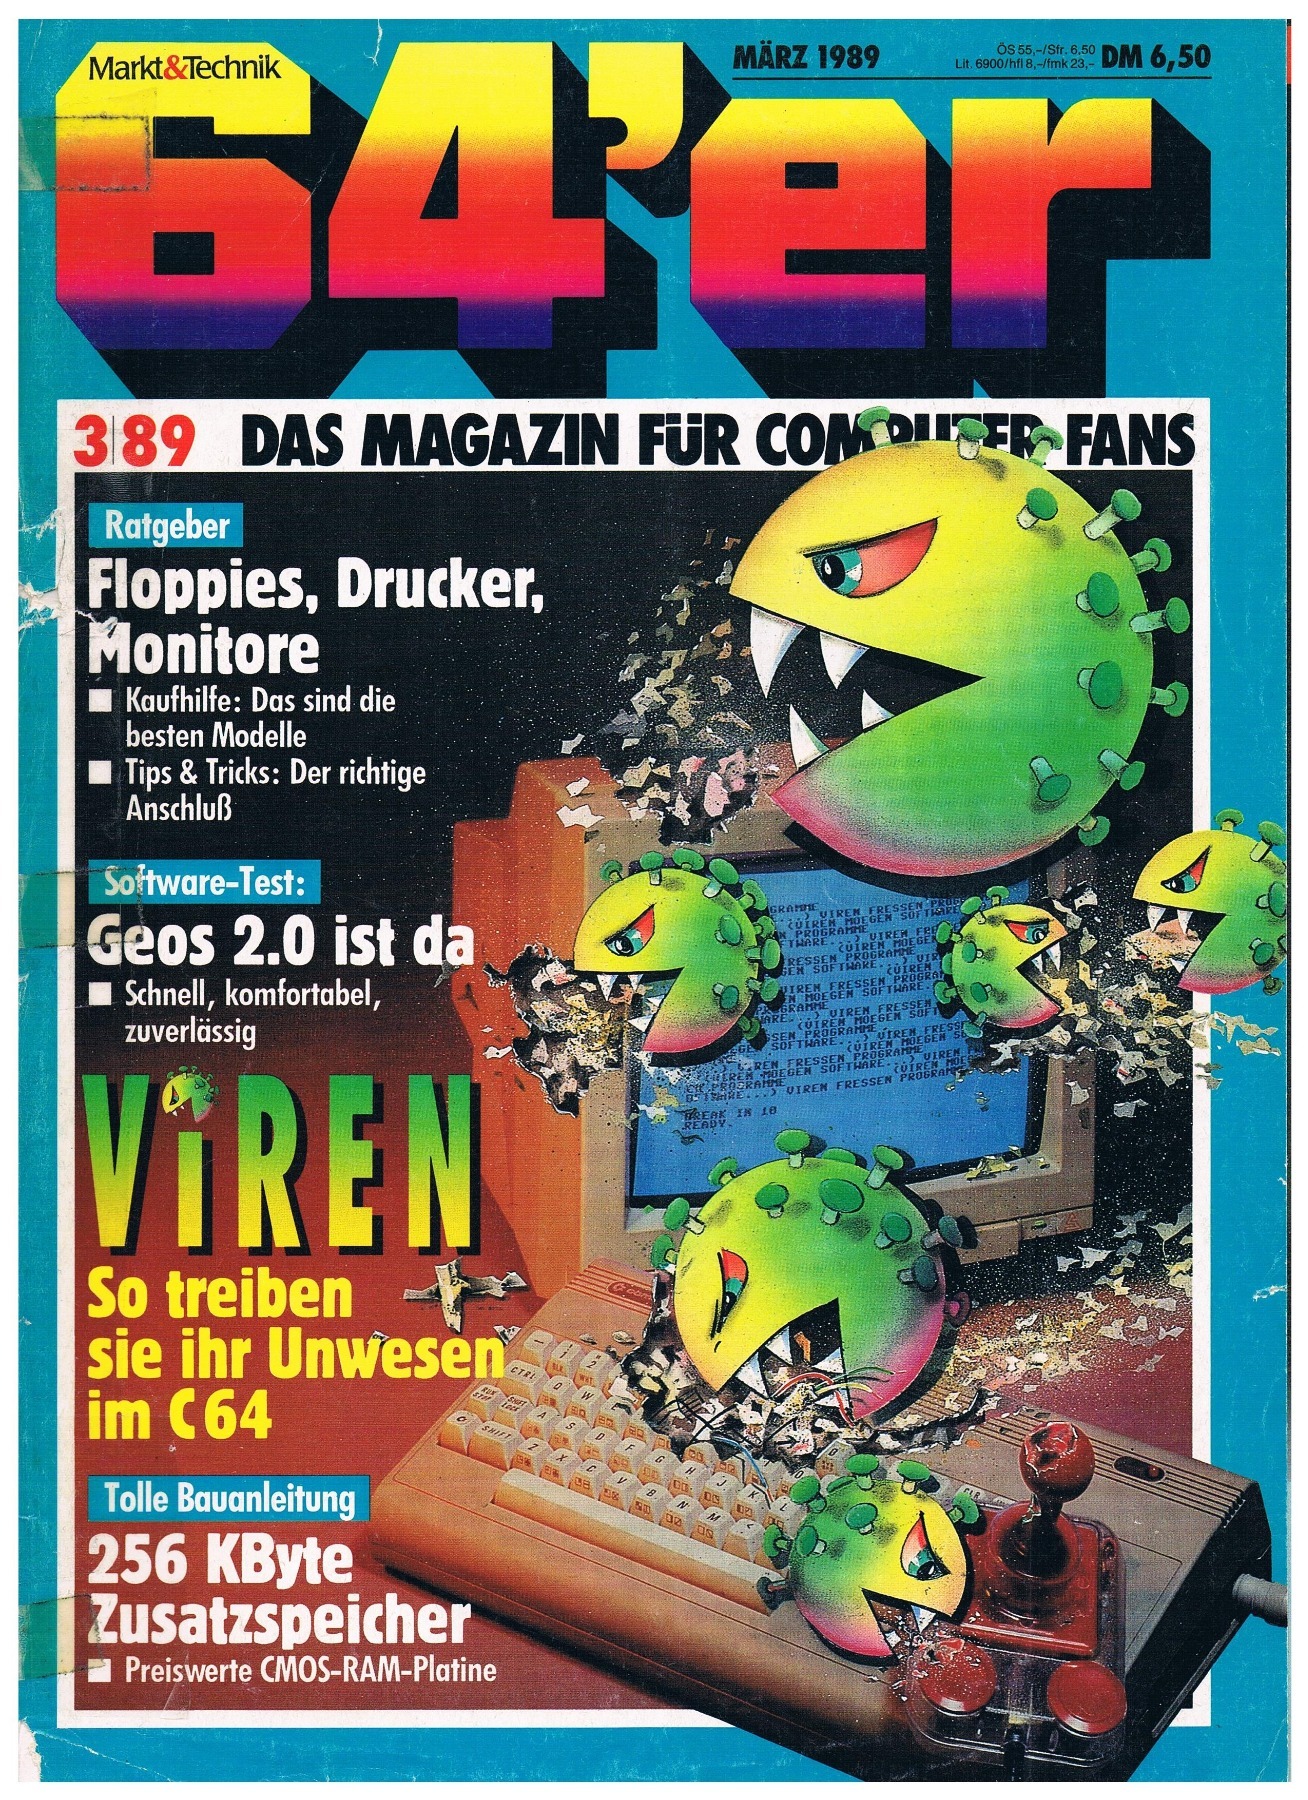 64er Magazin / Heft - Ausgabe 3/89 1989